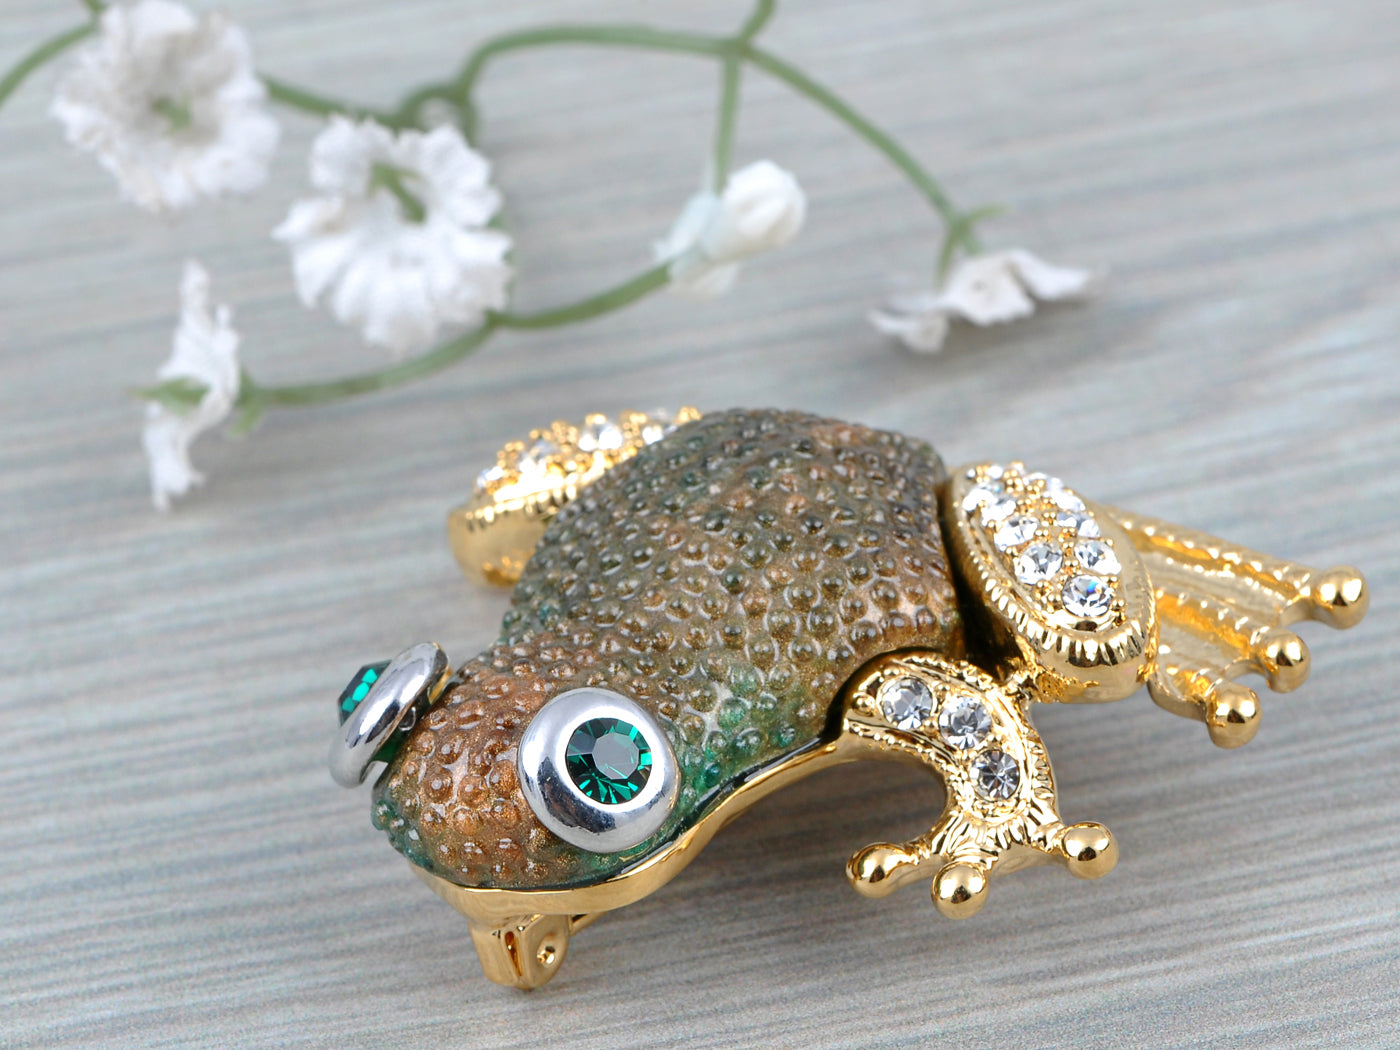 Elements Brown Green Bumpy Skin Waiting Frog Toad Pin Brooch